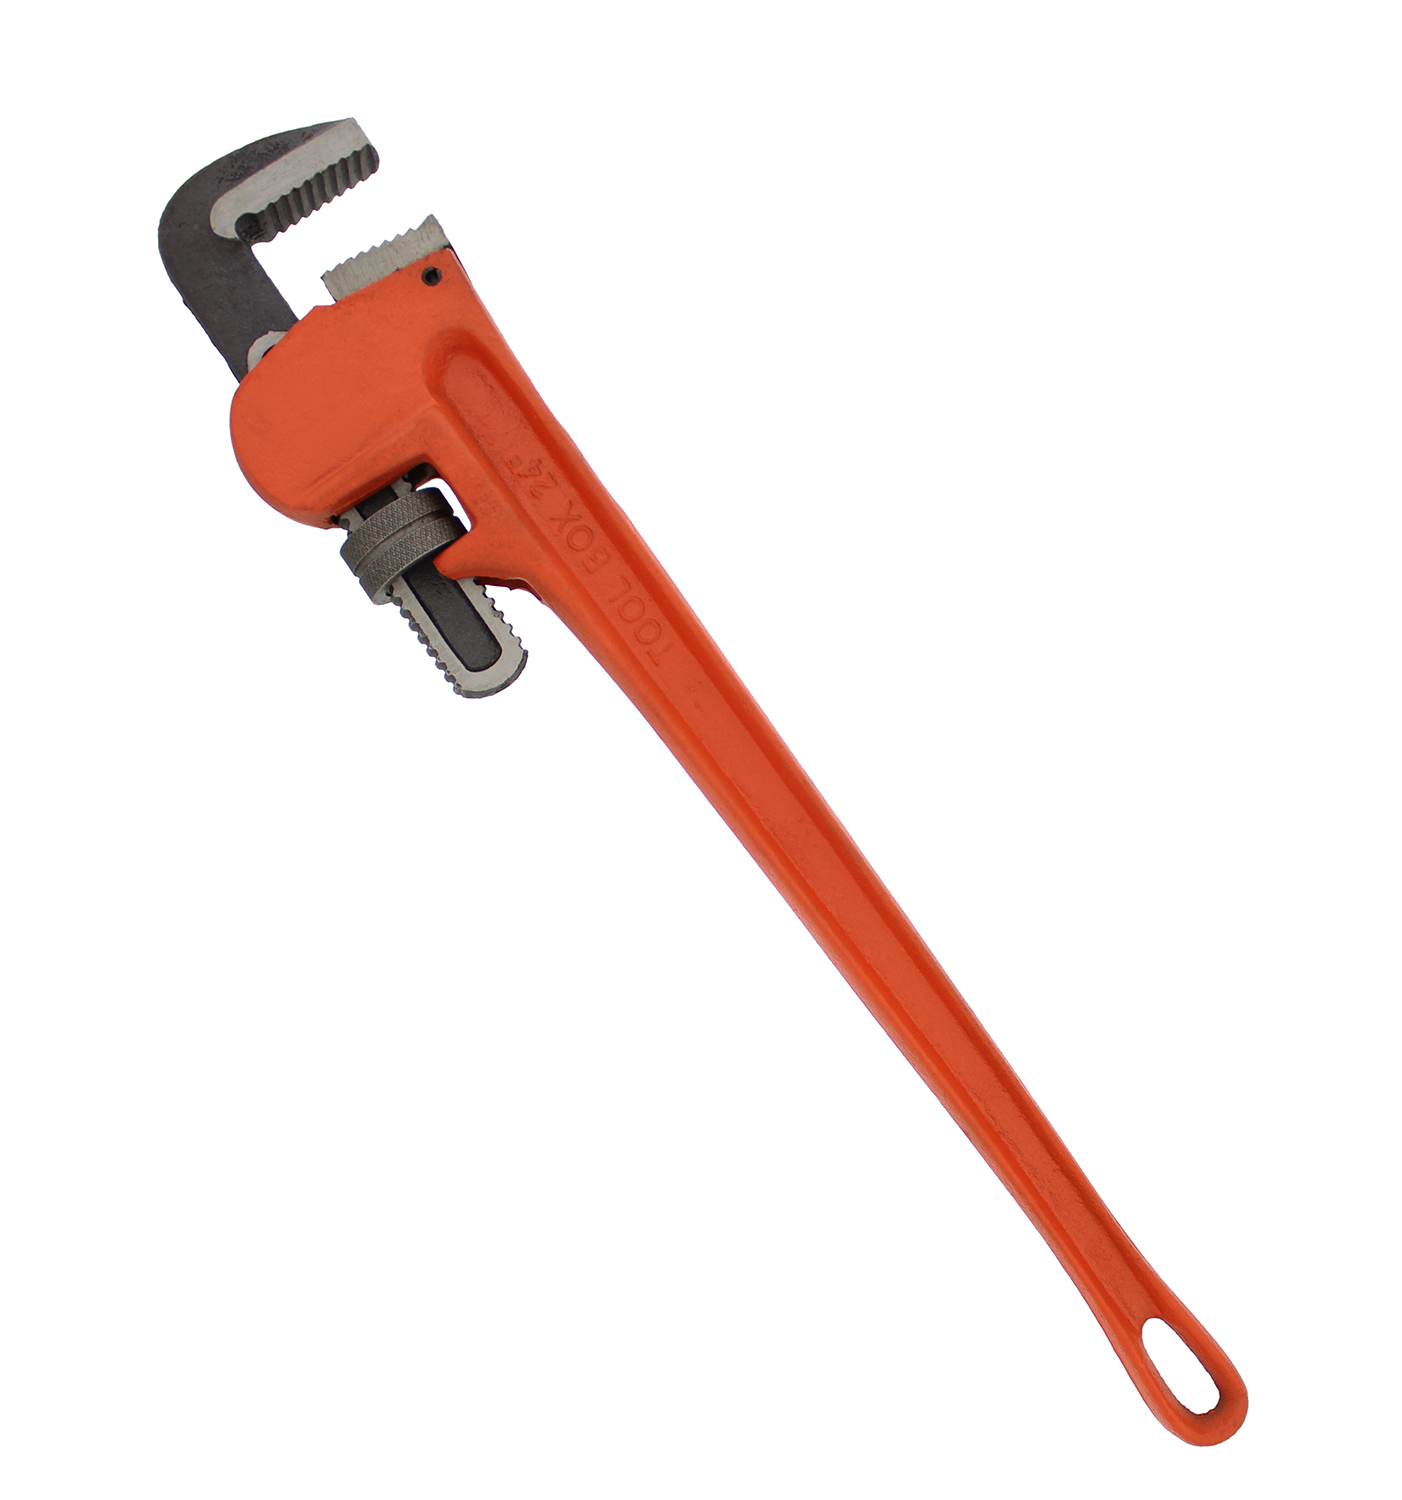 Straight Steel Plumbing Pipe Wrench – Adjustable Pliers Tool | eBay